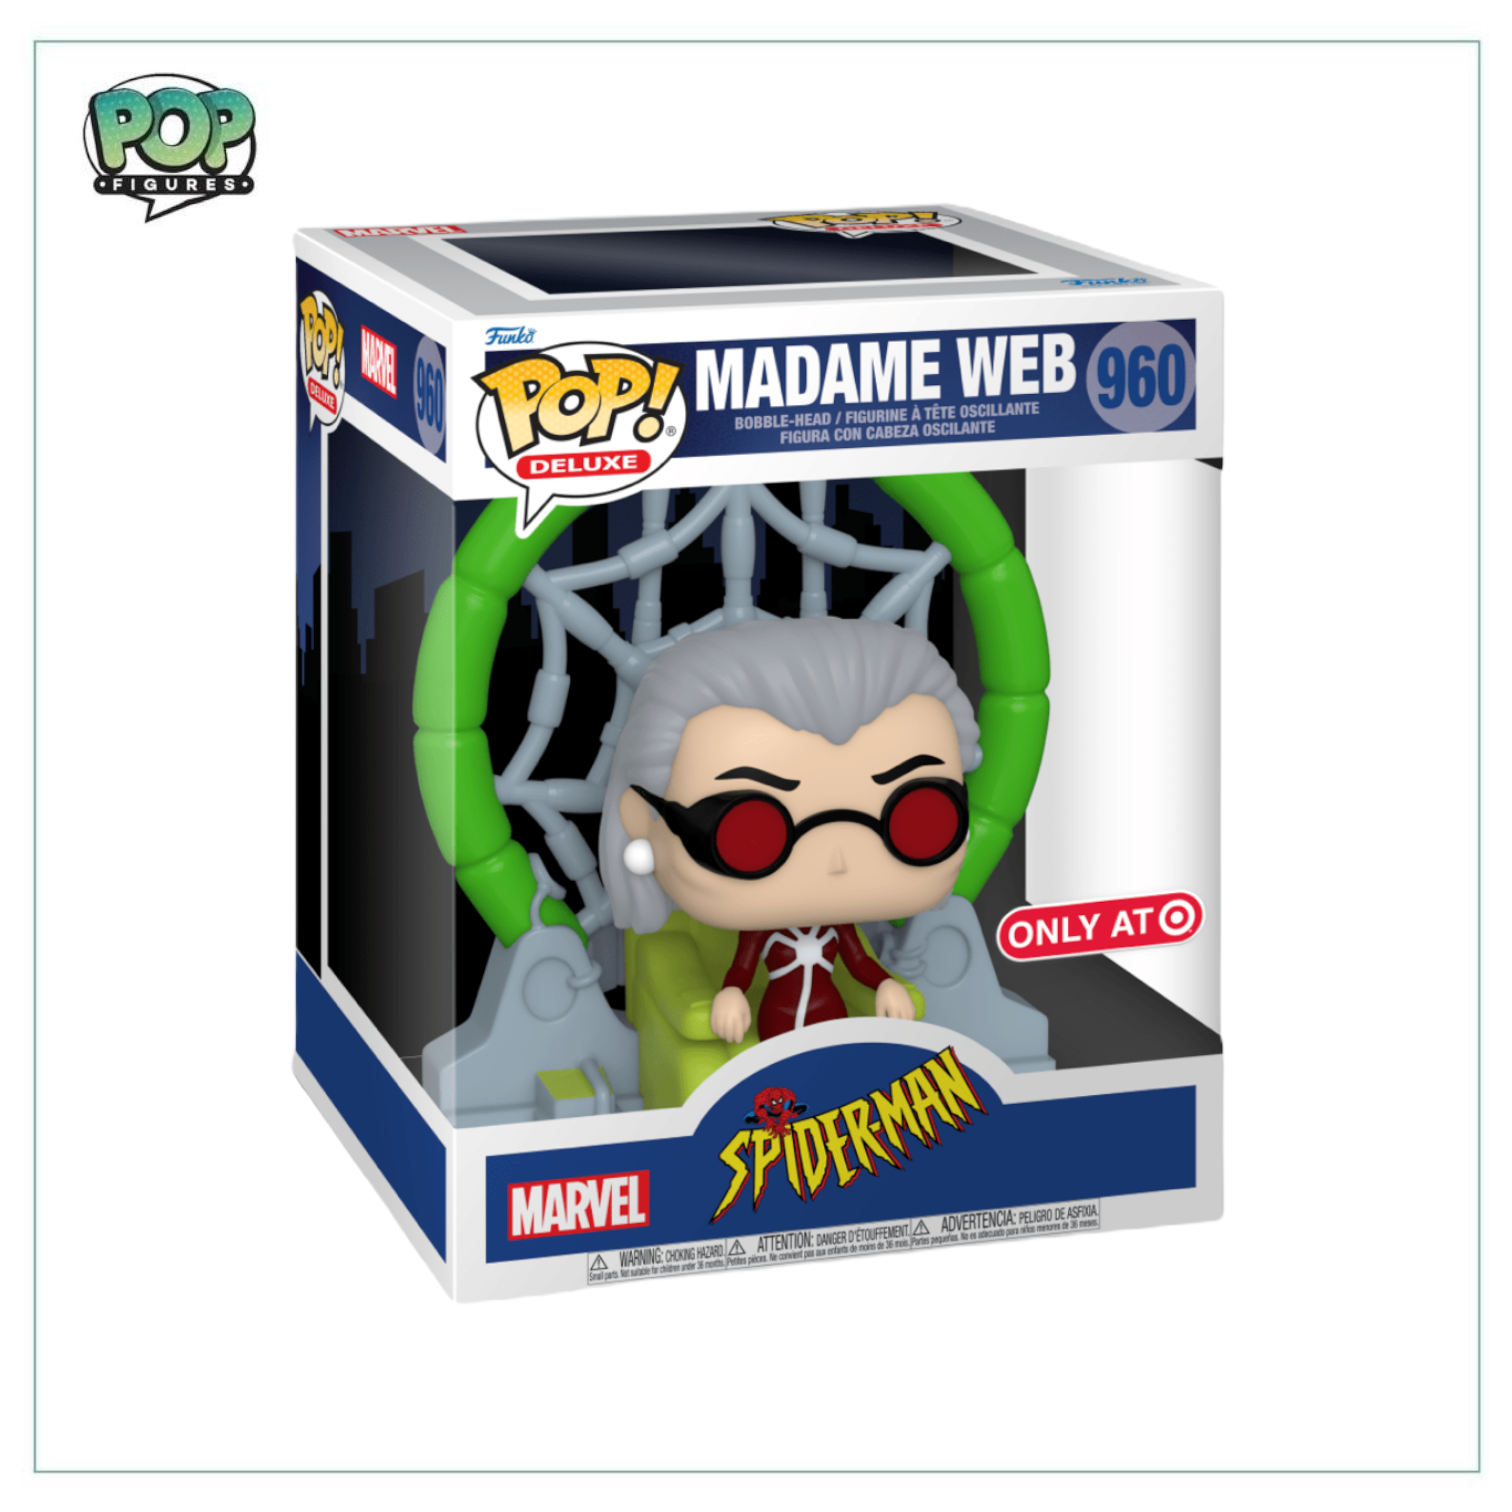 Madame Web #960 Funko Pop! Marvel - Target Exclusive